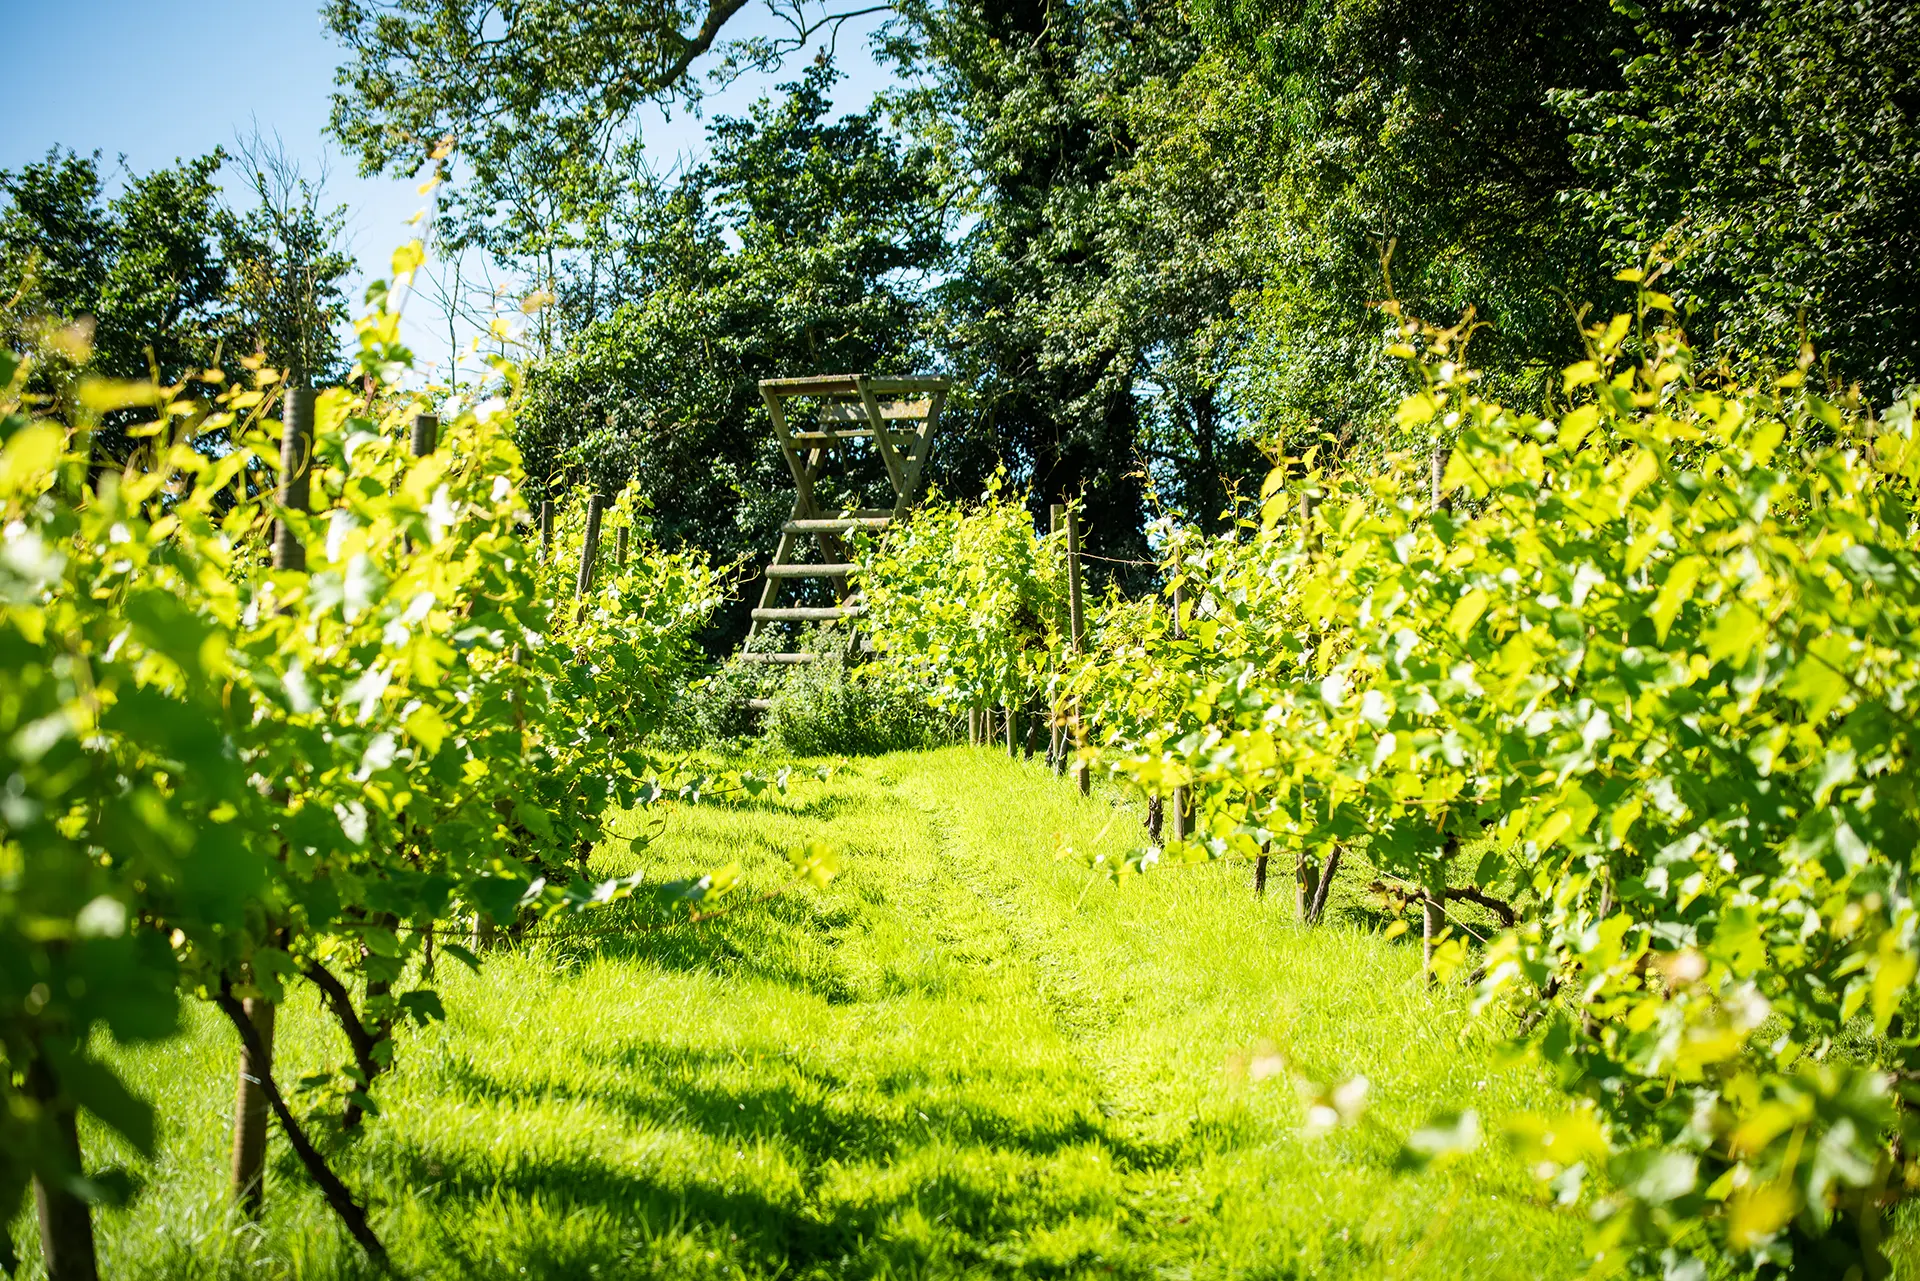 The Pear Tree Purton vineyard